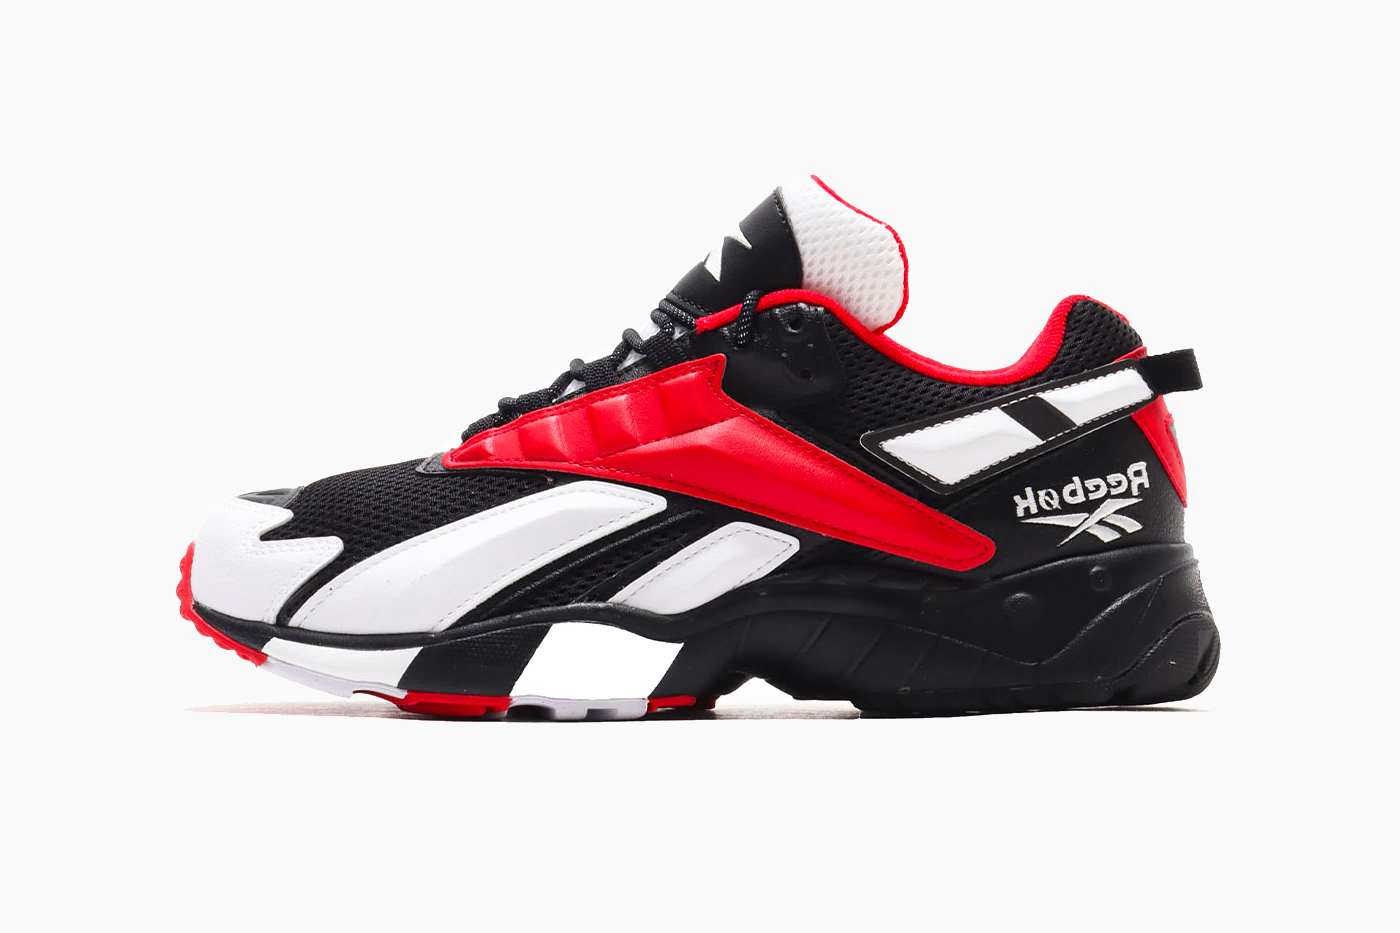 96 '1996 limited Reebok Interval 96 Sports Shoes Black Reebok Interval...